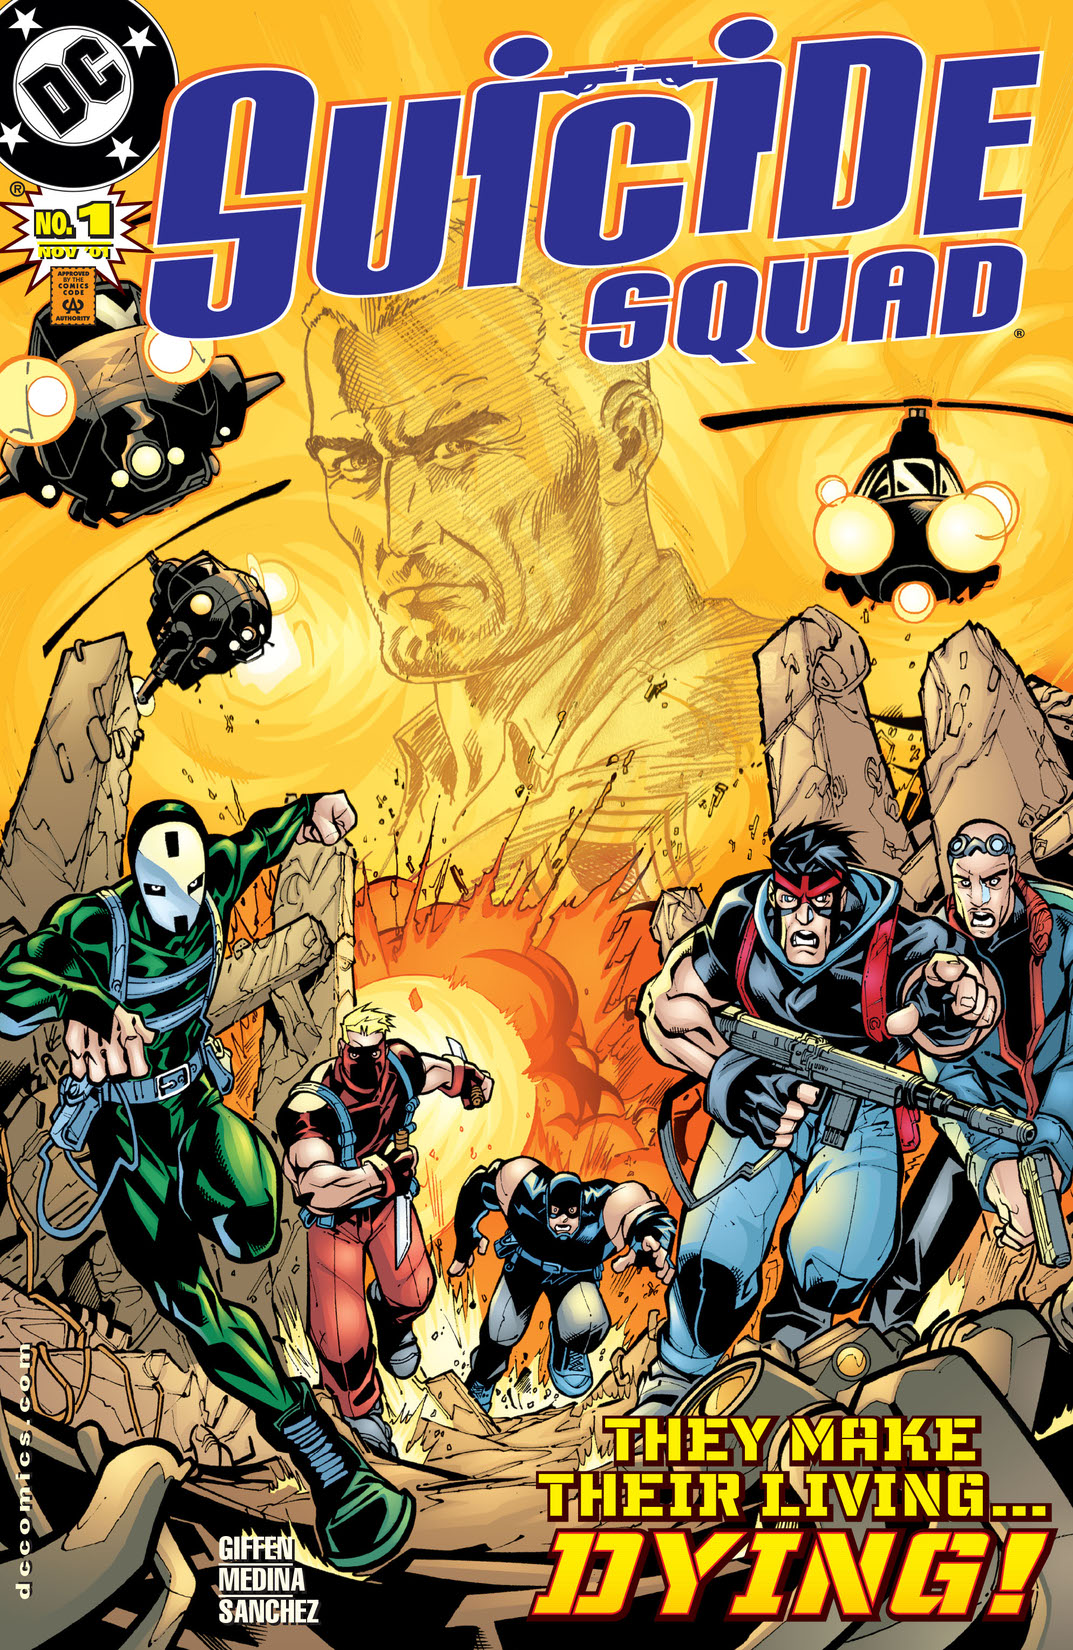 Suicide Squad (2001-) #1 preview images